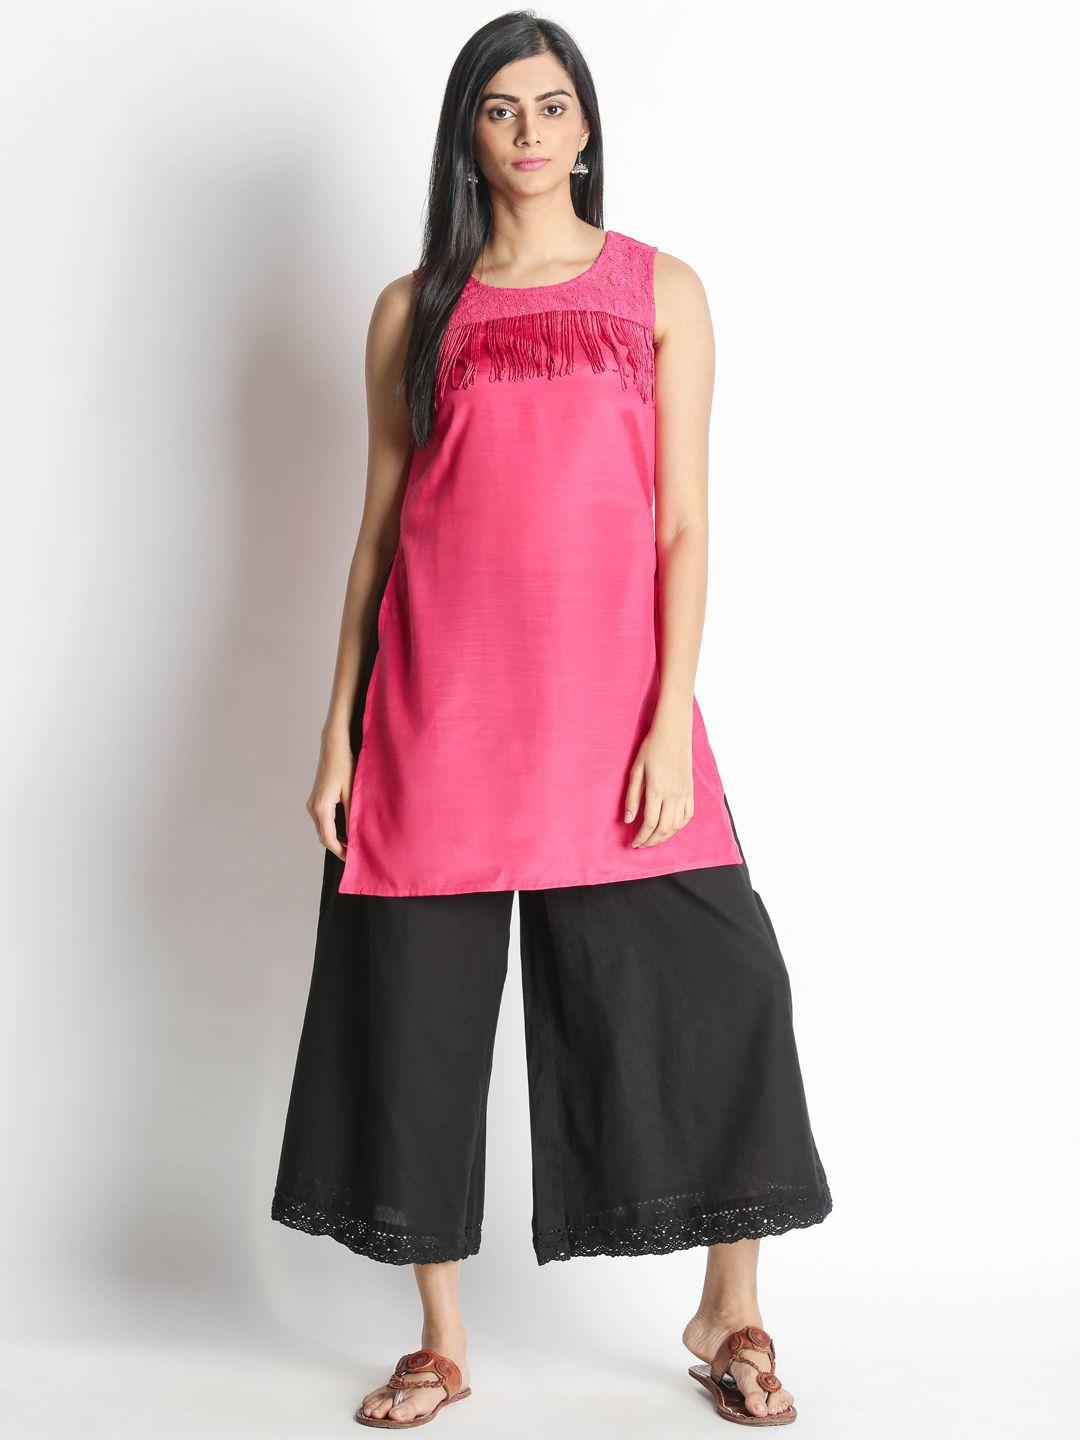 akkriti by pantaloons pink solid tunic